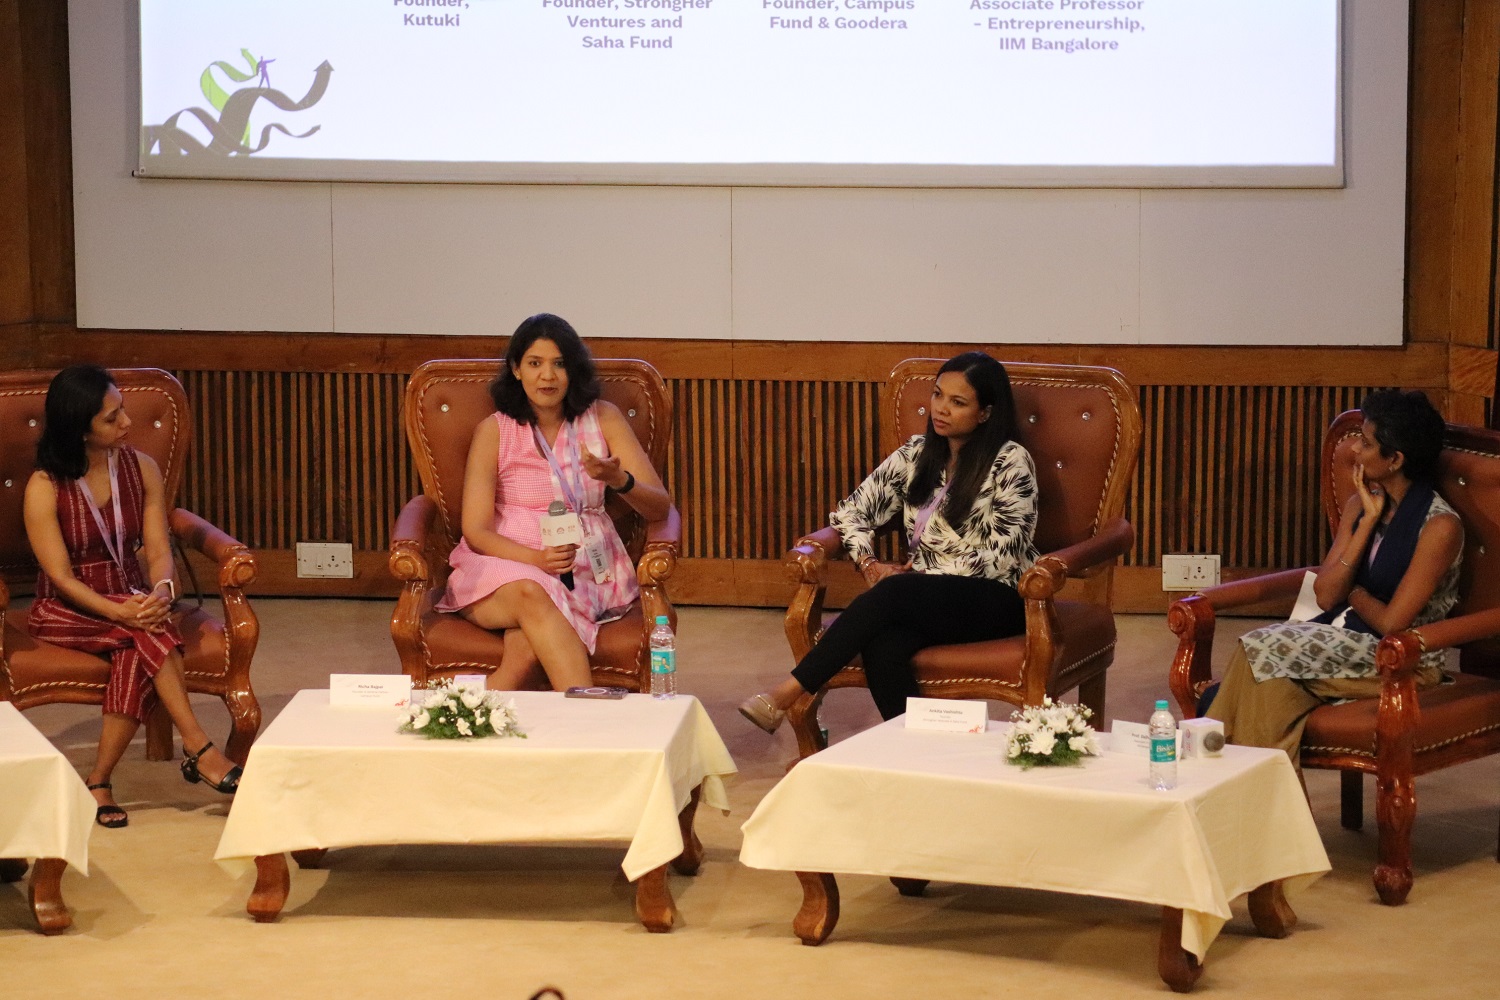 Sneha Sundaram, Founder, Kutuki; Ankita Vashishta, Founder, StrongHer Ventures & Saha Fund; Richa Bajpai, Founder & General Partner, Campus Fund and Prof. Dalhia Mani, faculty from the Entrepreneurship area, IIMB, at the panel discussion on “Woman innovators - What sets them apart’.